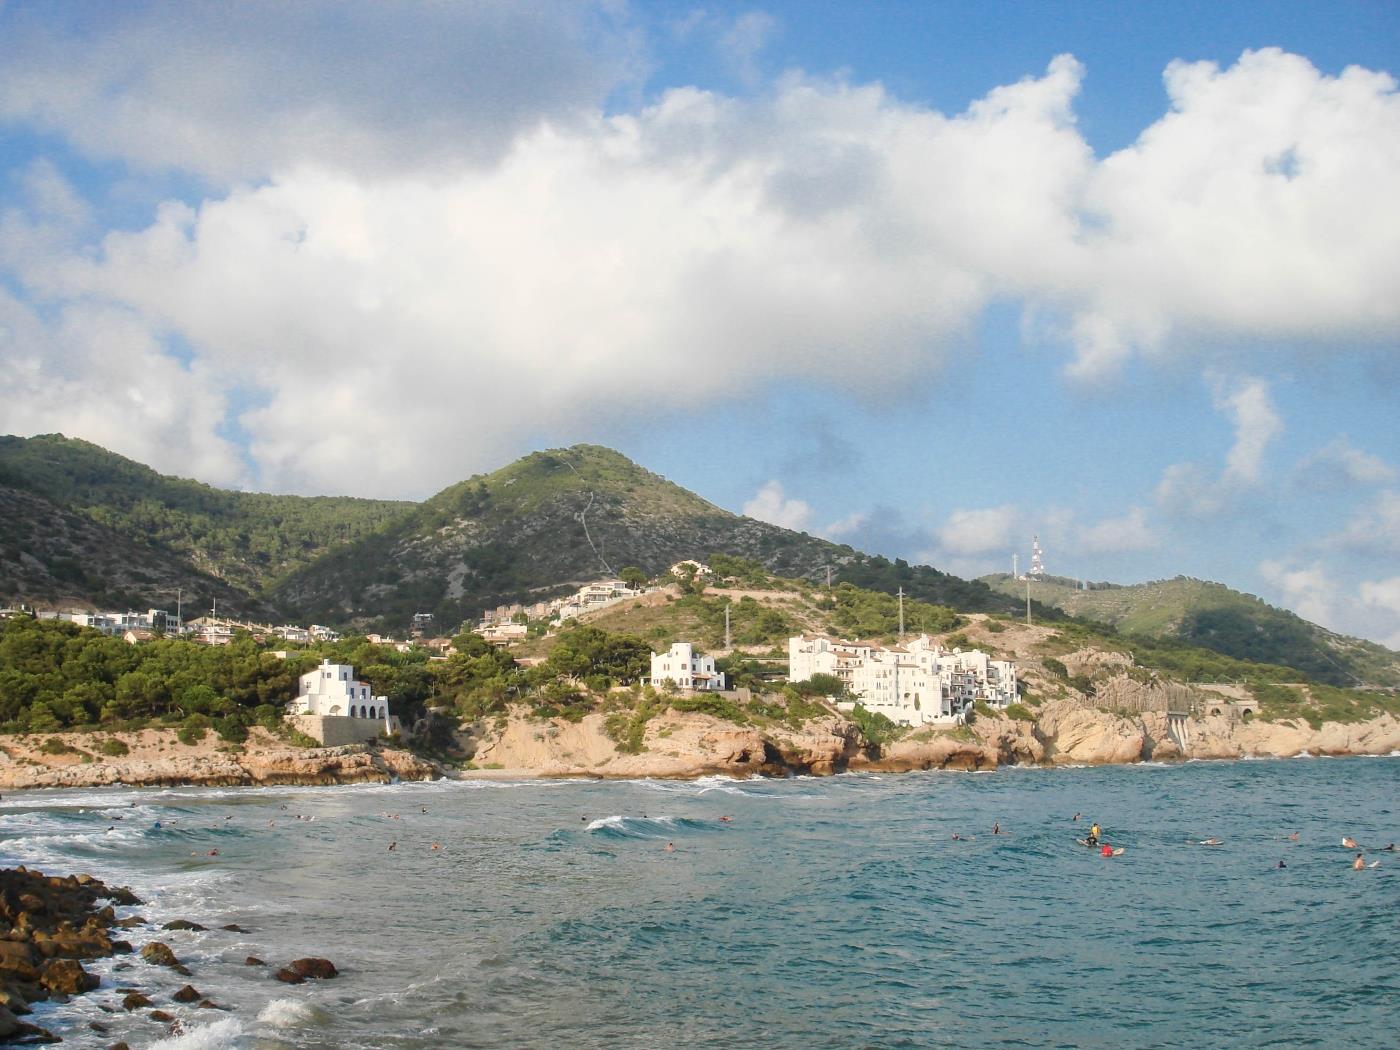 CAPRITX DE MAR BY BLAUSITGES Terraza, piscina y wifi sobre el mar, bonita vista en SITGES